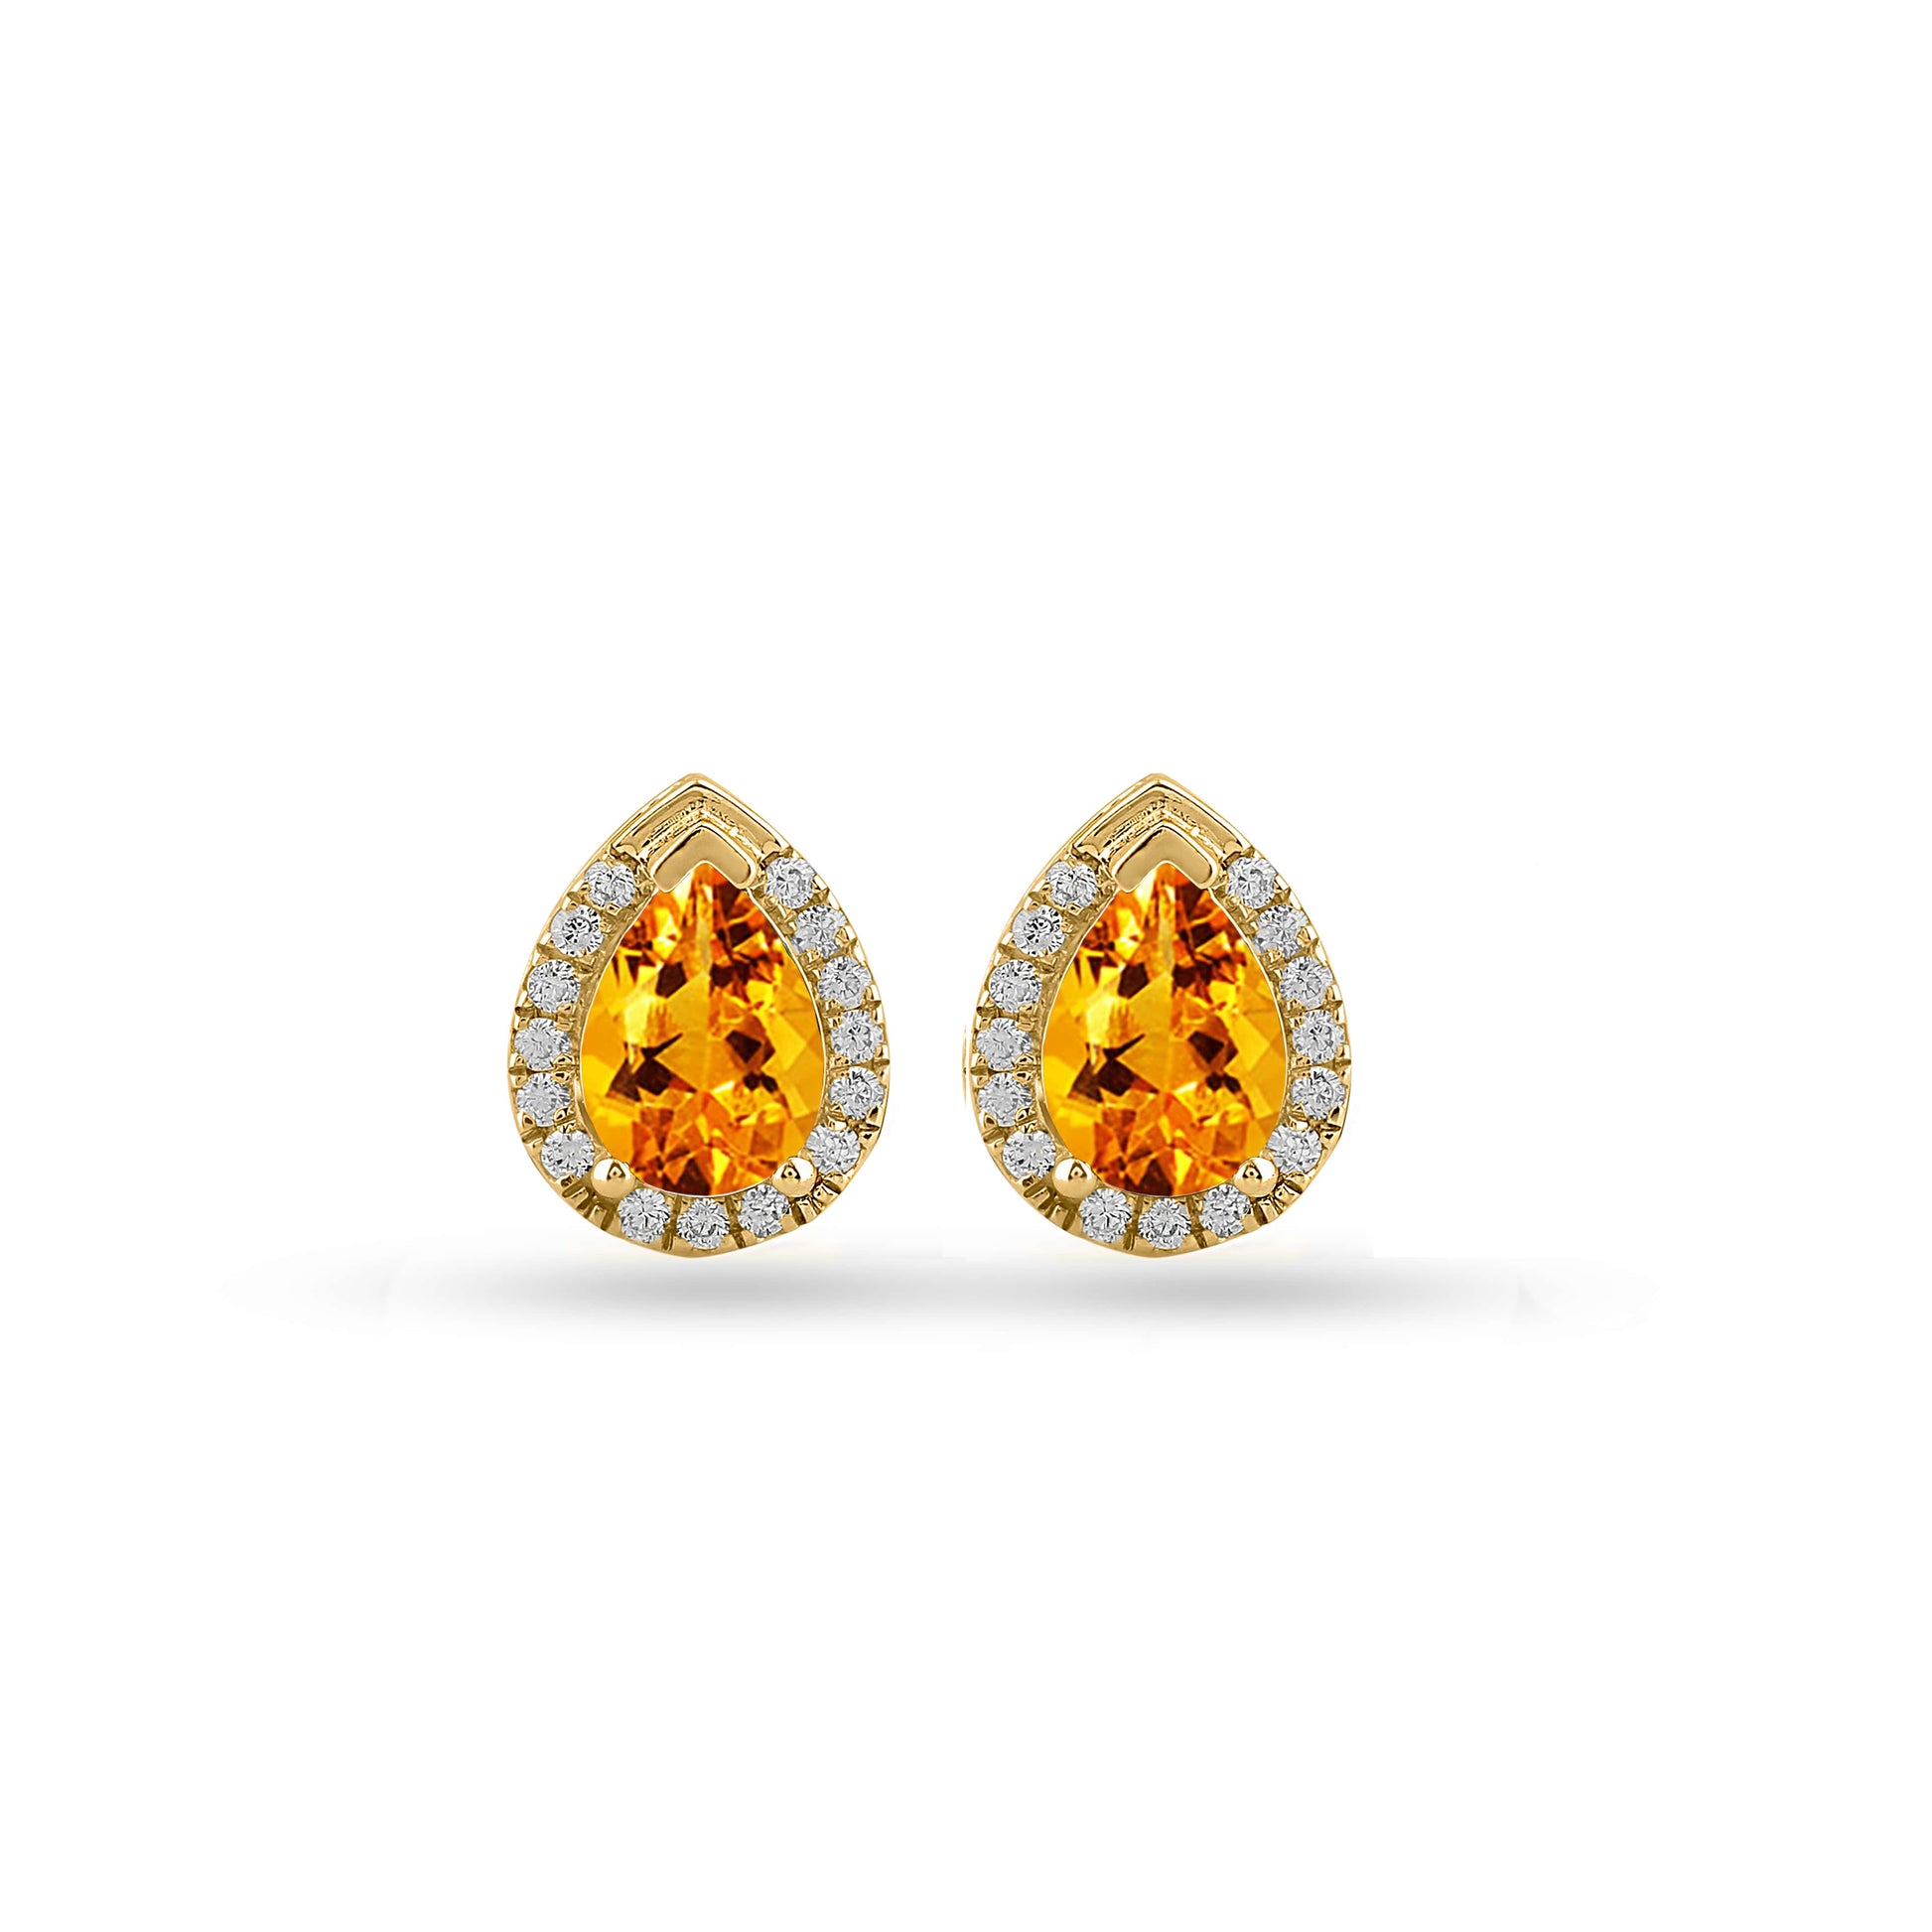 Halo earrings in citrine